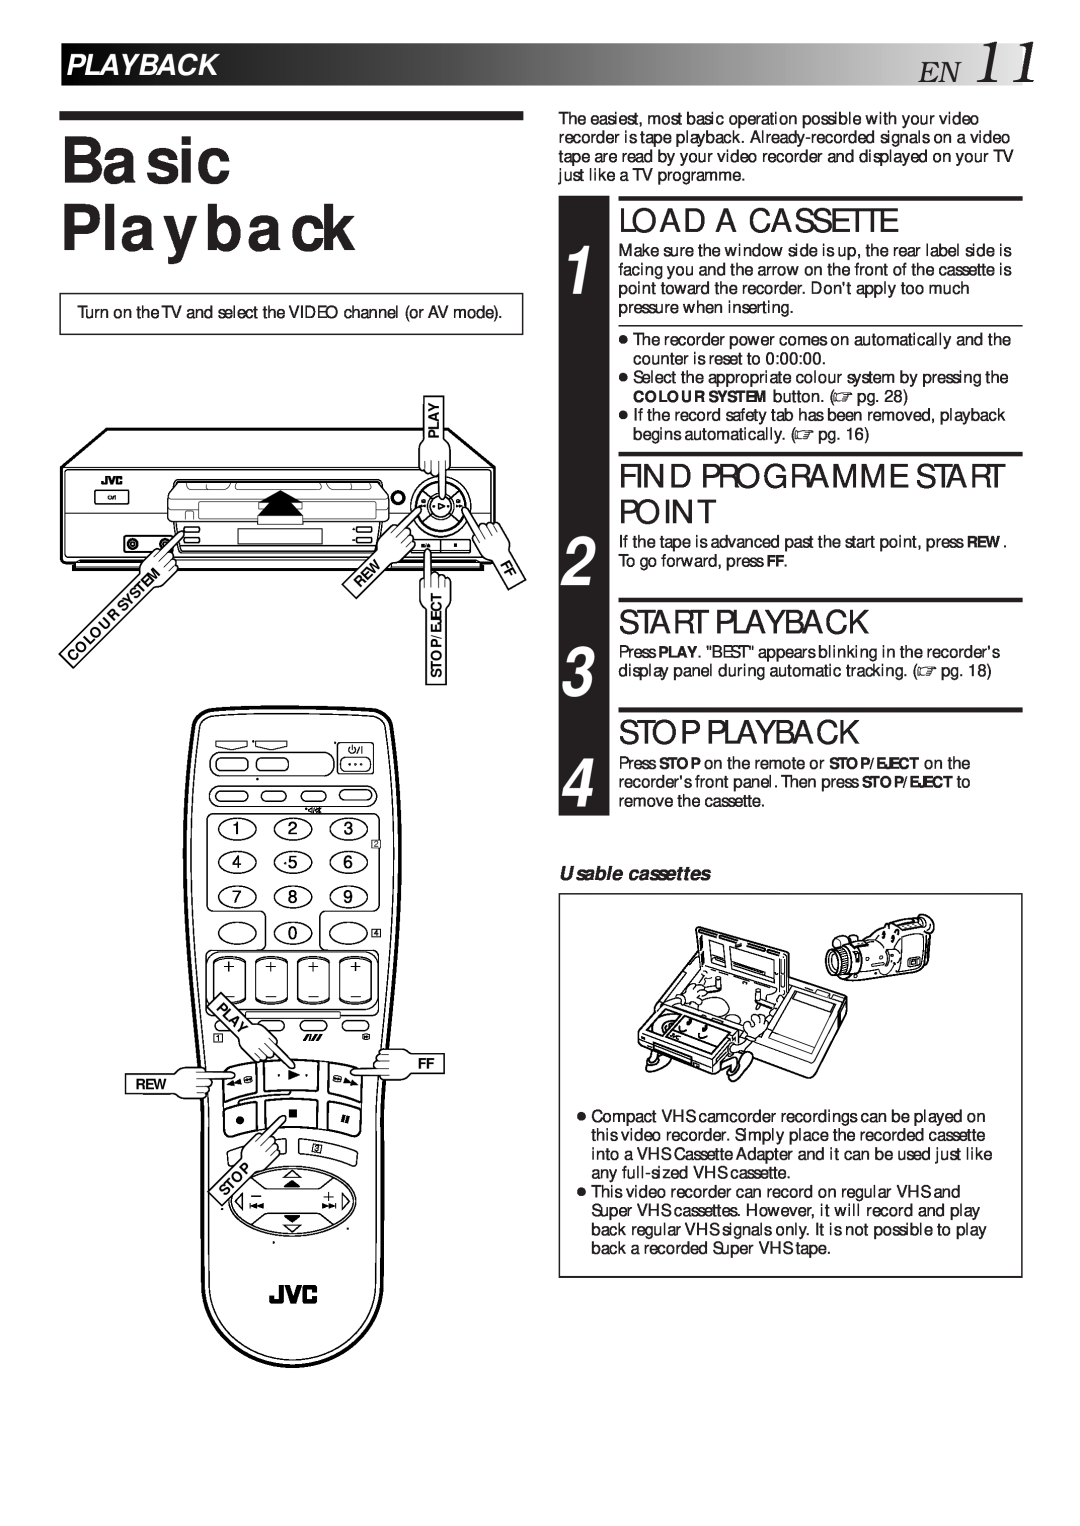 JVC HR-J461MS Basic Playback, EN11, Load A Cassette, Point, Start Playback, Stop Playback, Find Programme Start 